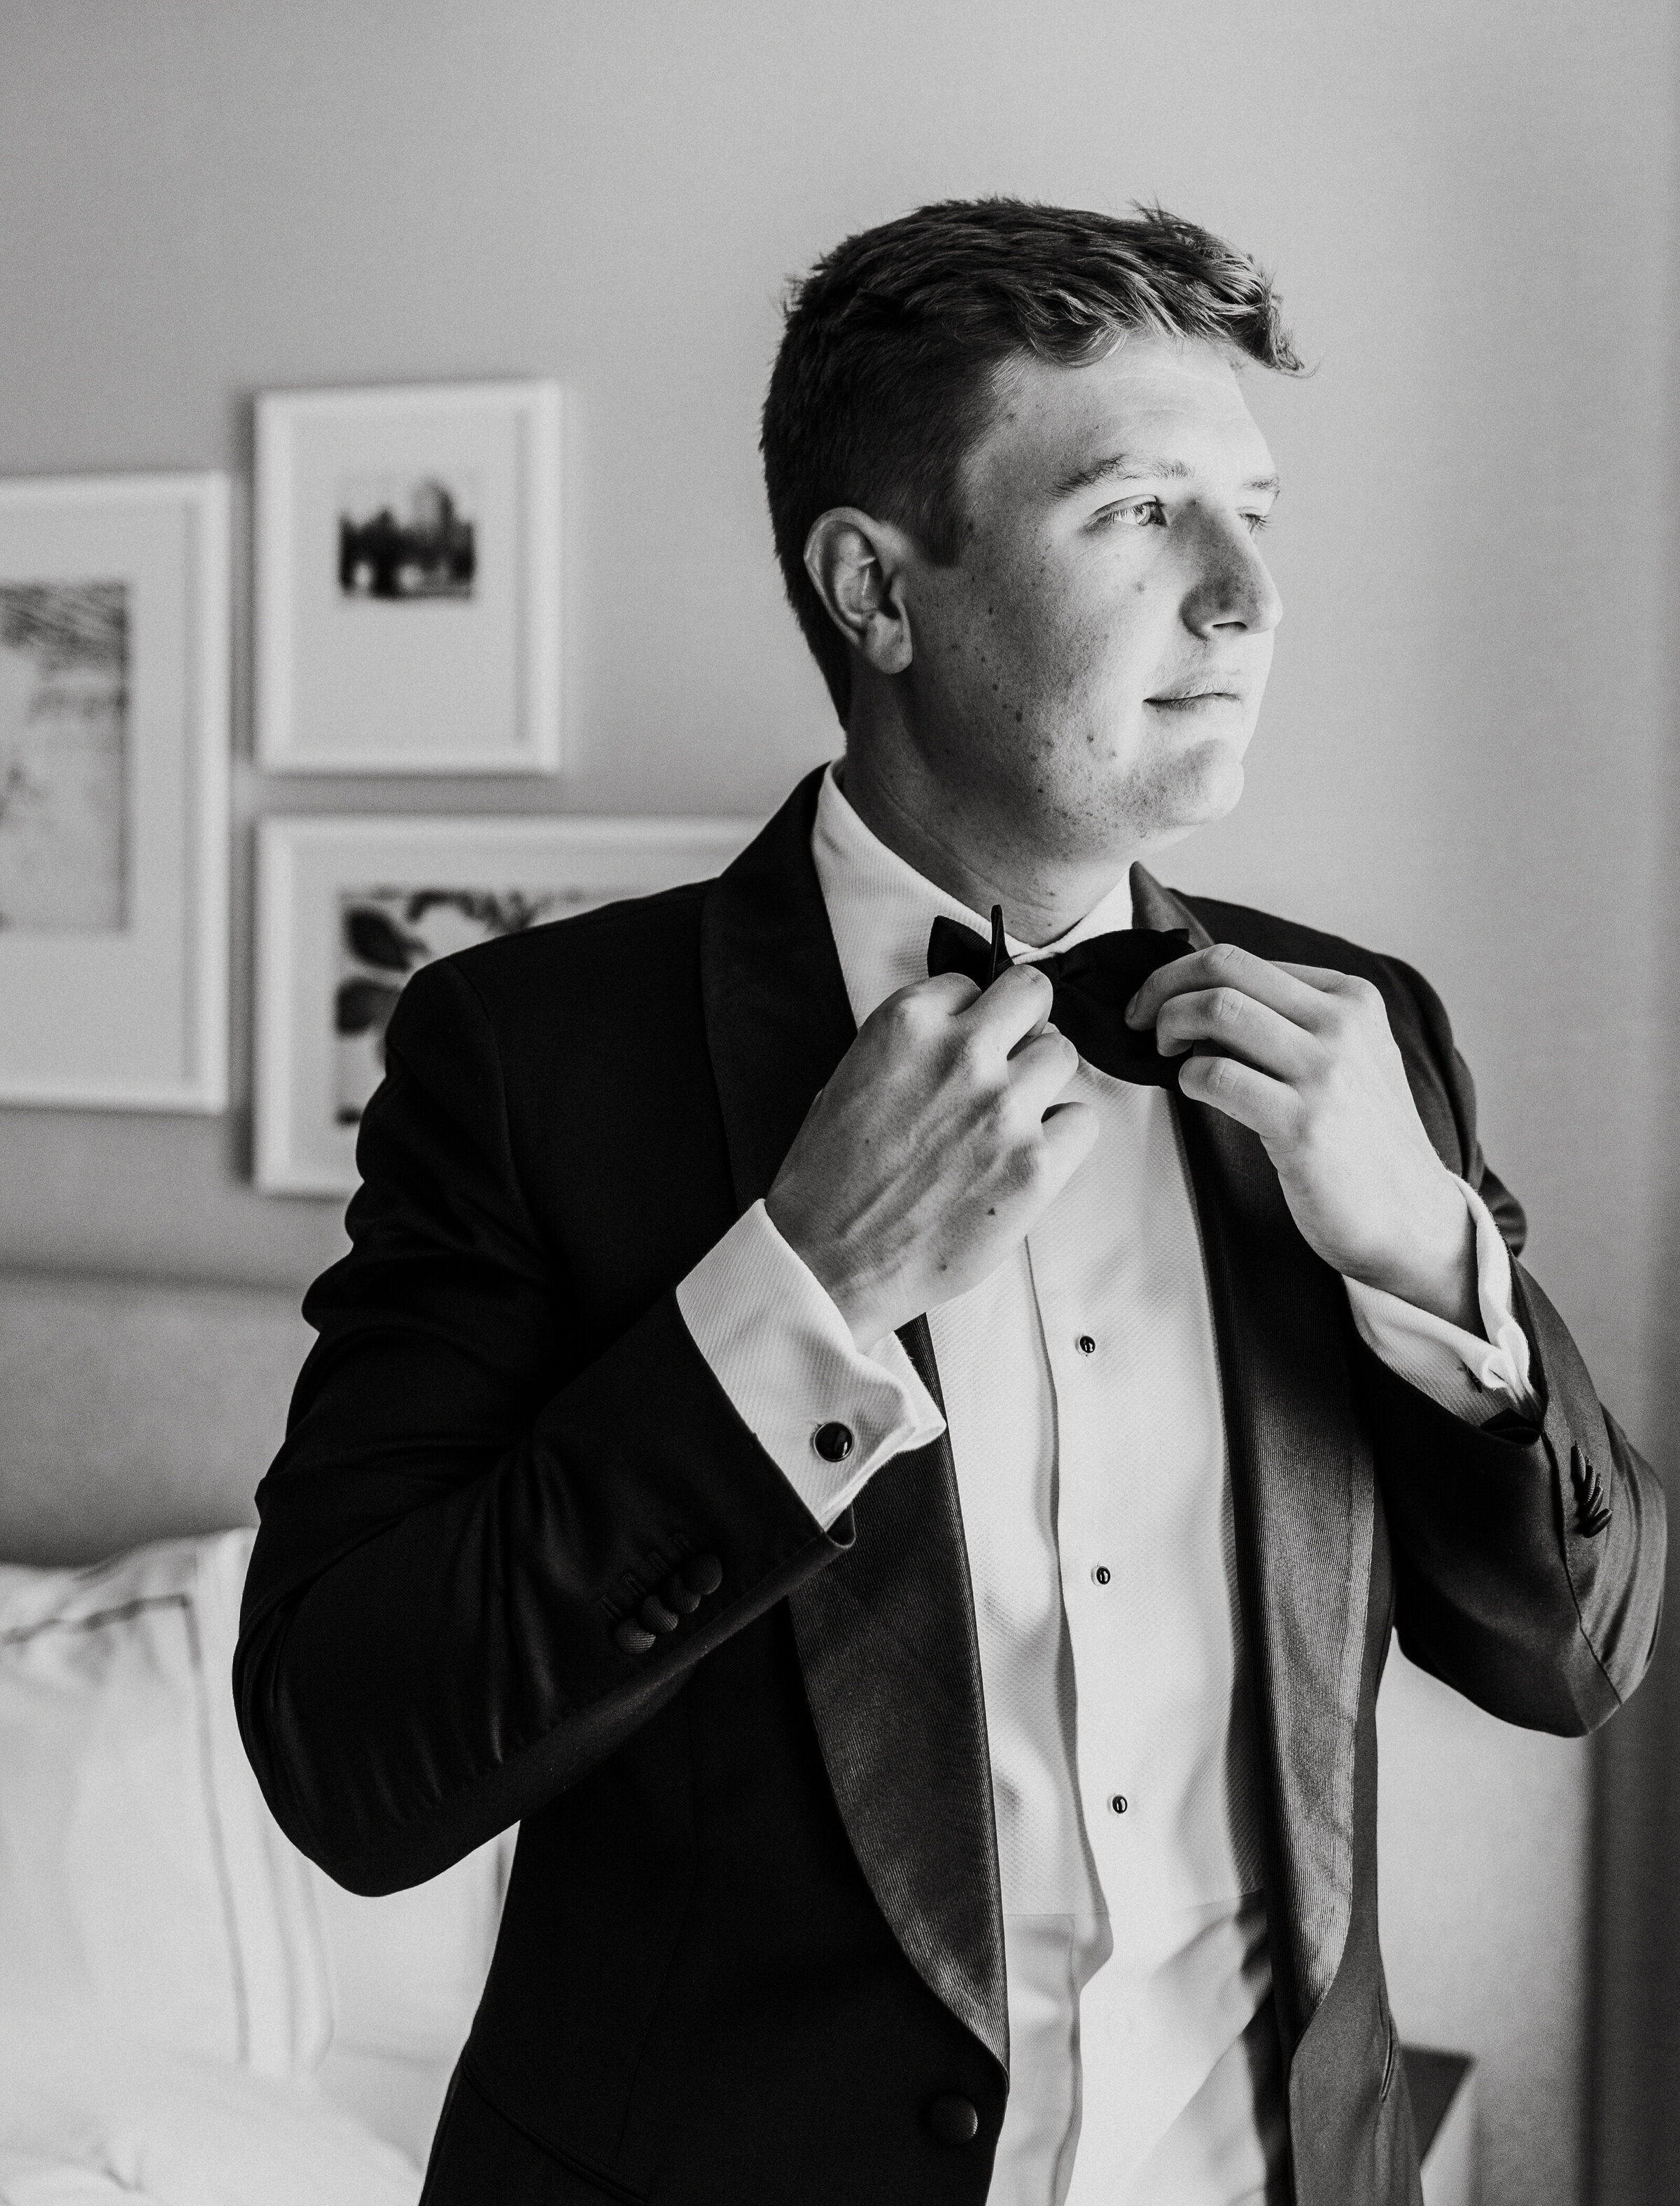 Groom adjusts bow tie before wedding ceremony at SRV Boston in Boston, Massachusetts